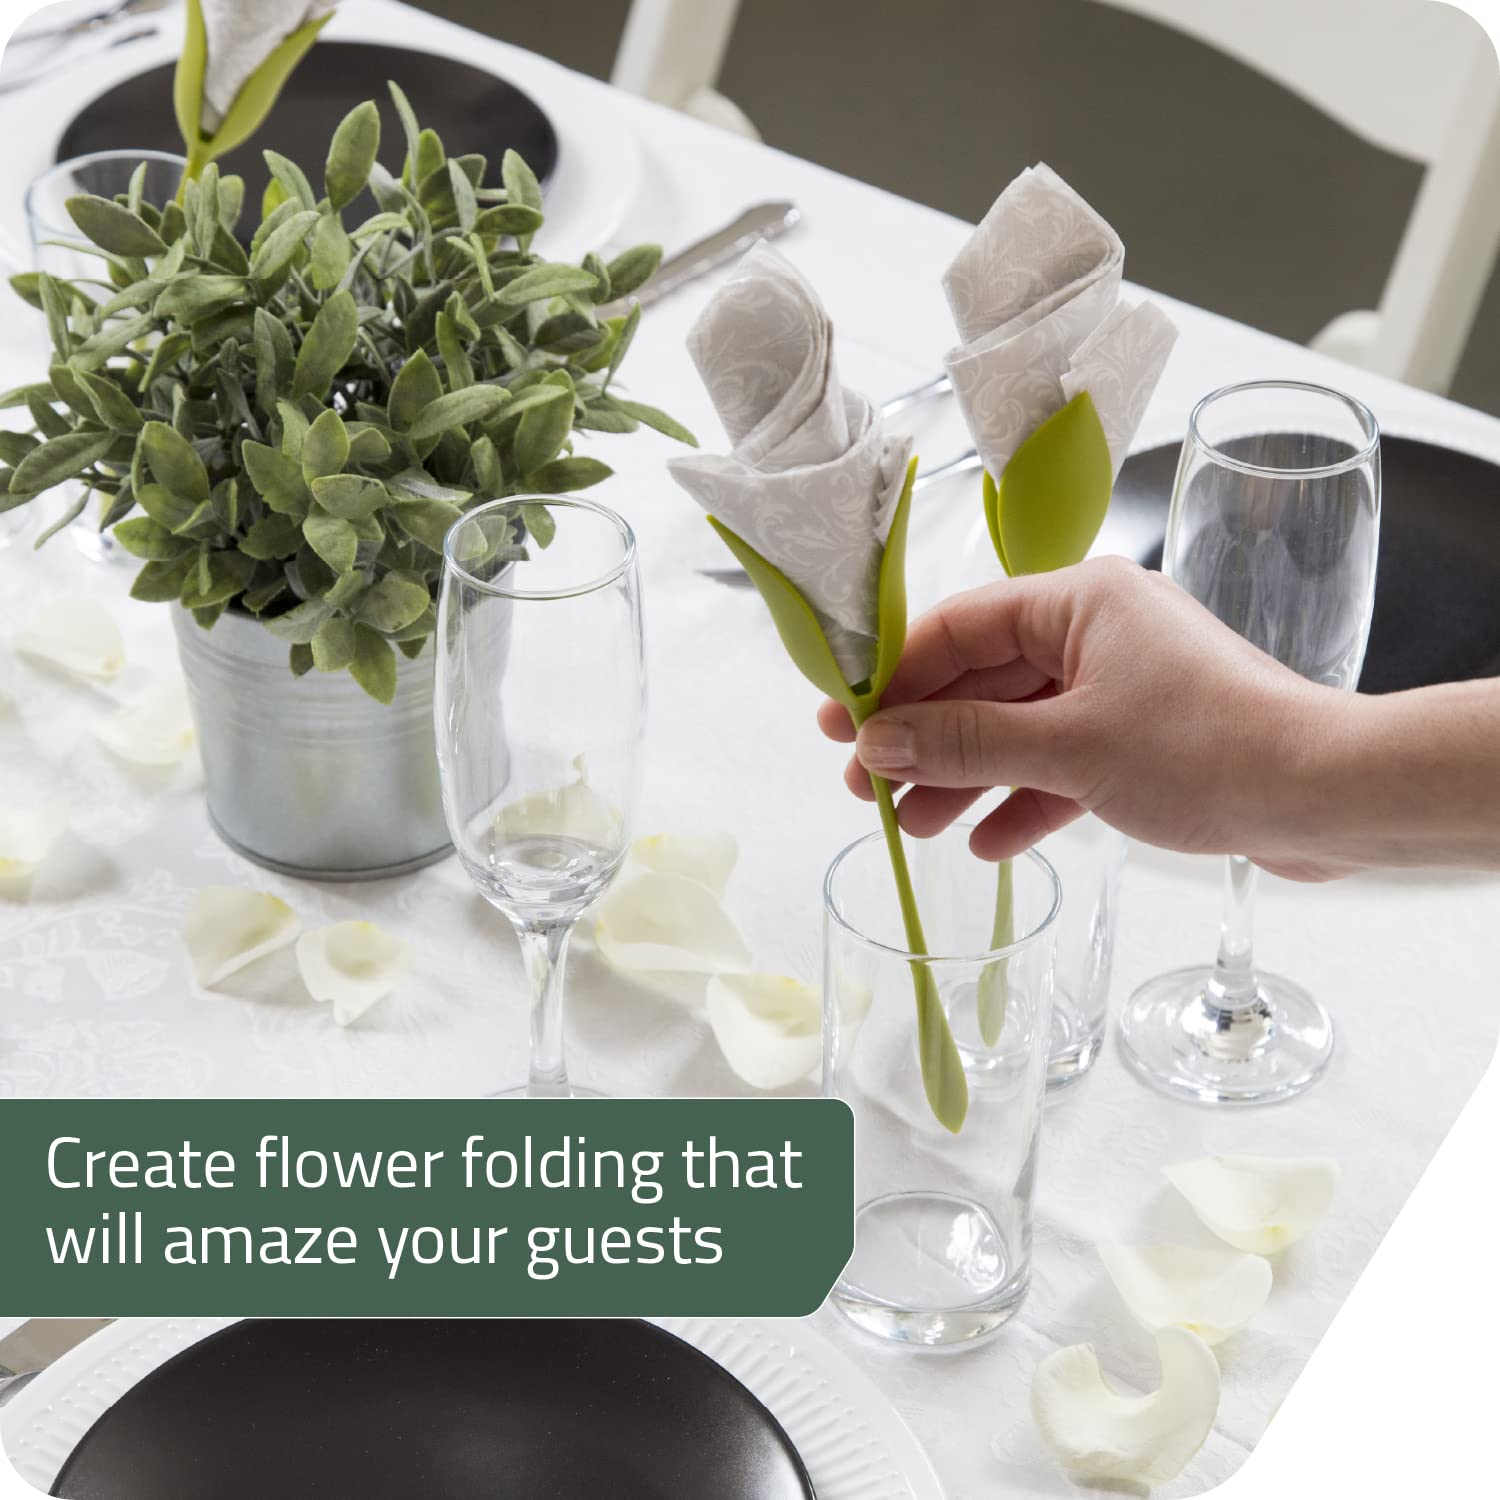 Peleg Design Bloom Napkin Holders for Tables, Set of 4 Green Stemmed Plastic Twist Flower Buds Serviette Holders Plus White Napkins for Making Original Table Arrangements